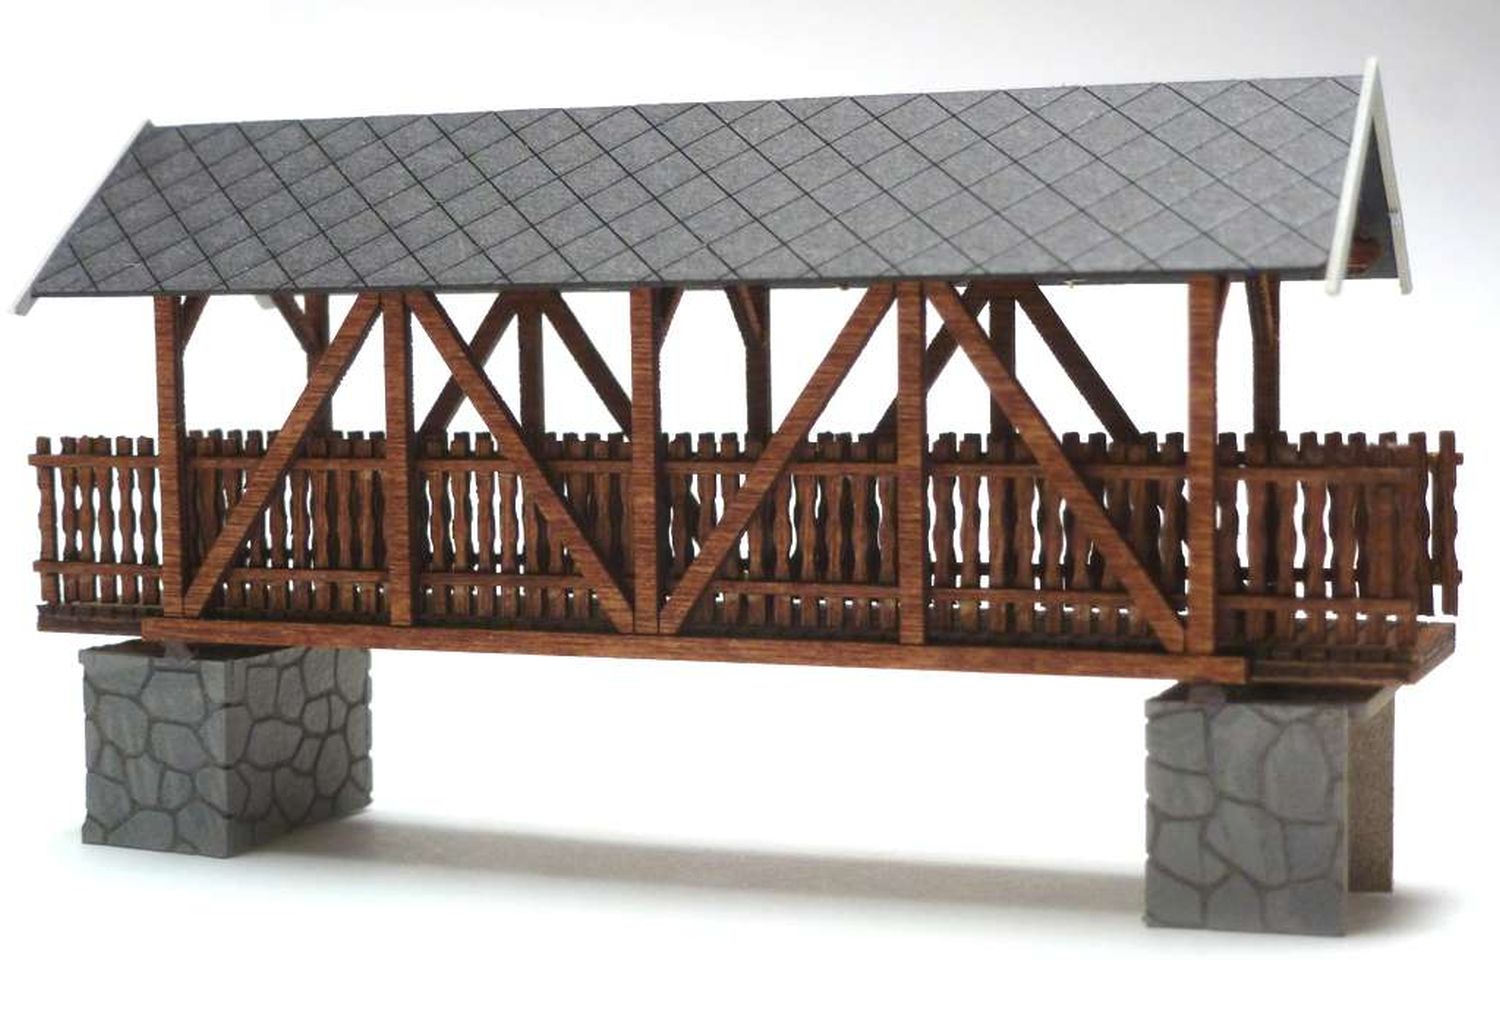 igra 120019 - Brücke Typ 4, 18 x 84 x 40 mm, Bausatz